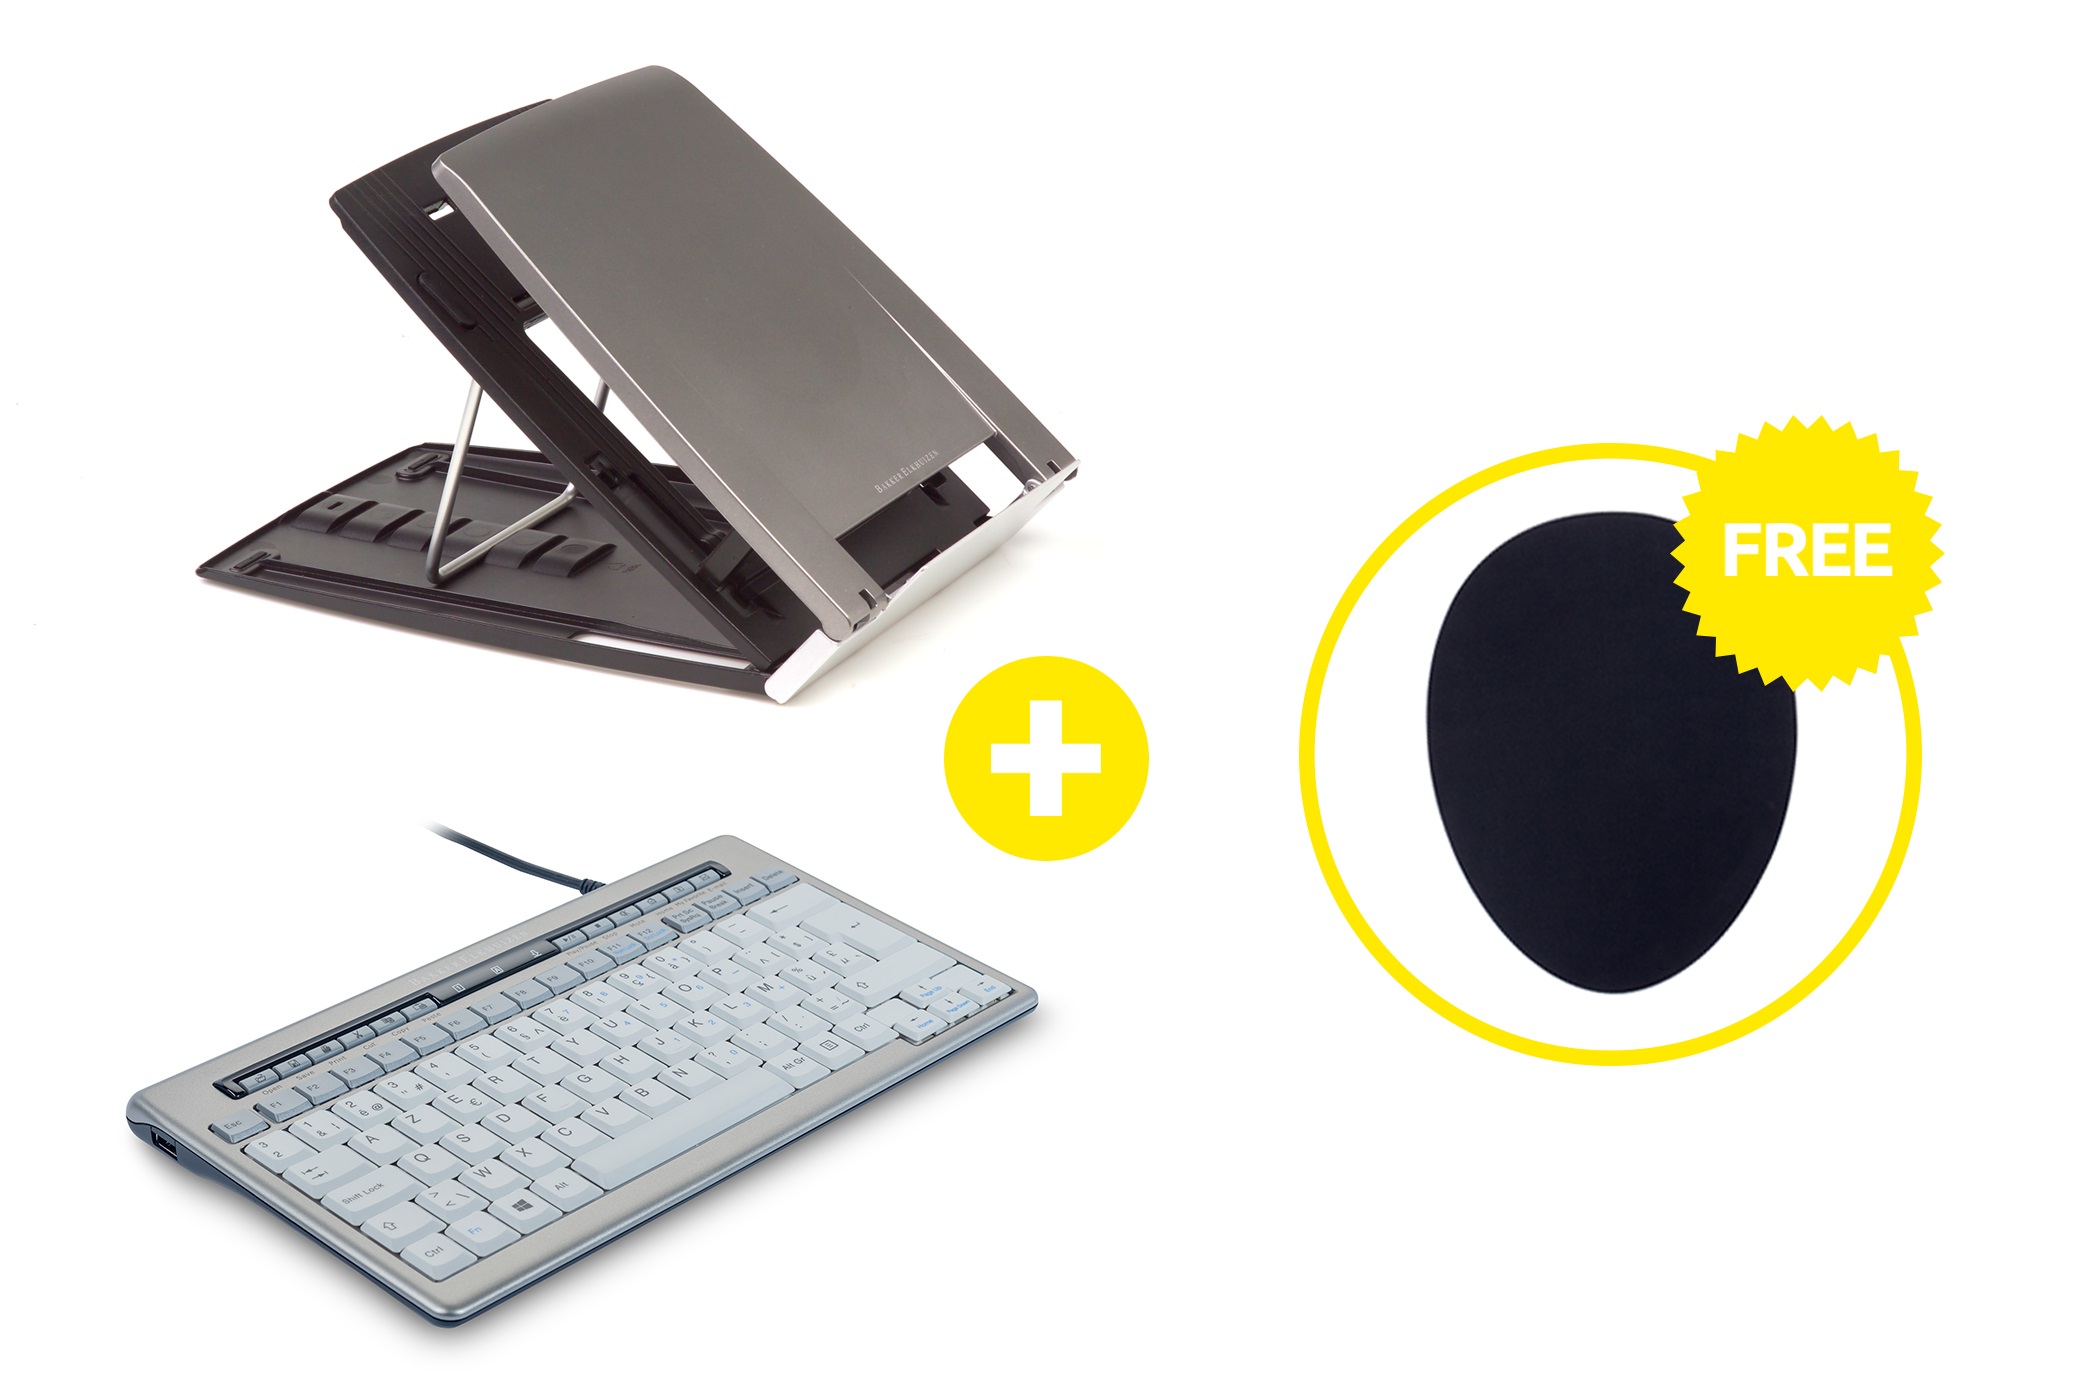 leeg onze titel ErgoQ330 + compact toetsenbord S-Board840+gratis Egg muismat - Ergo Comfort